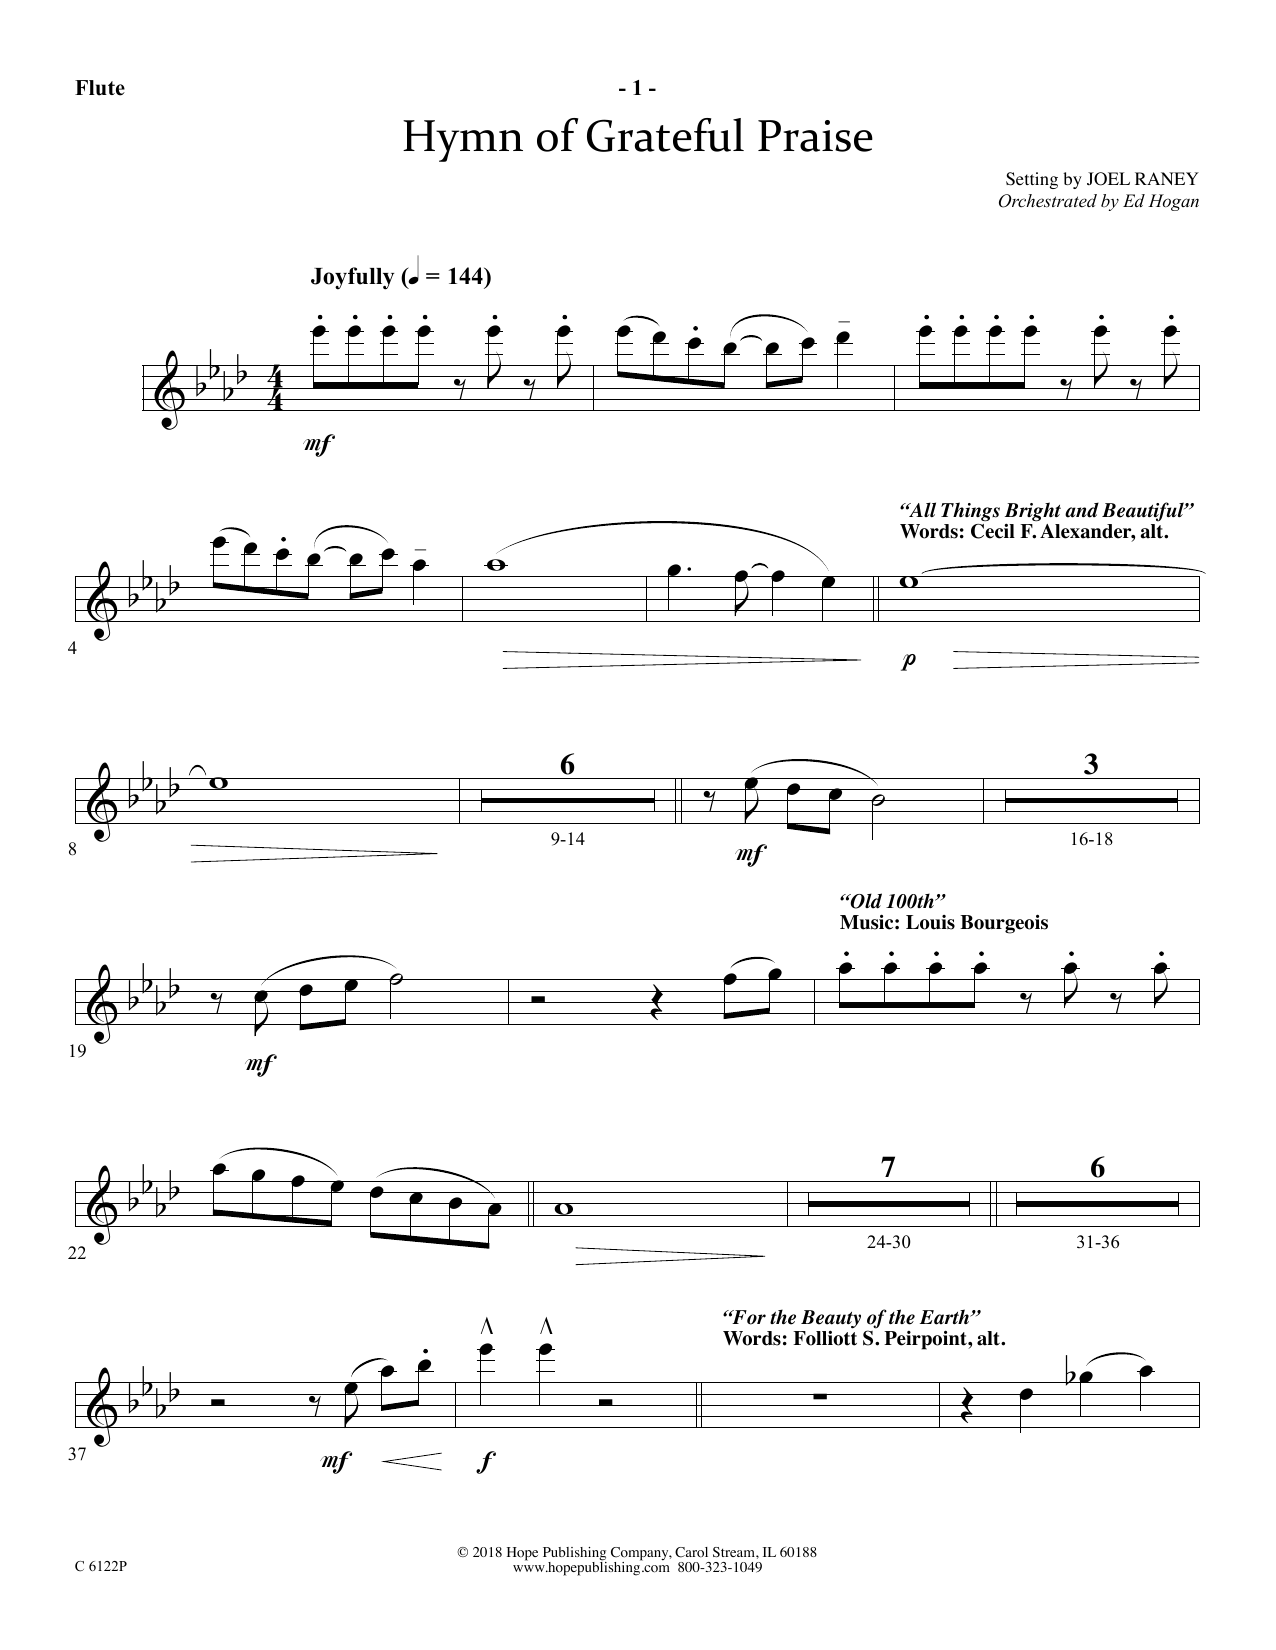 Joel Raney Hymn Of Grateful Praise - Flute Sheet Music Notes & Chords for Choir Instrumental Pak - Download or Print PDF